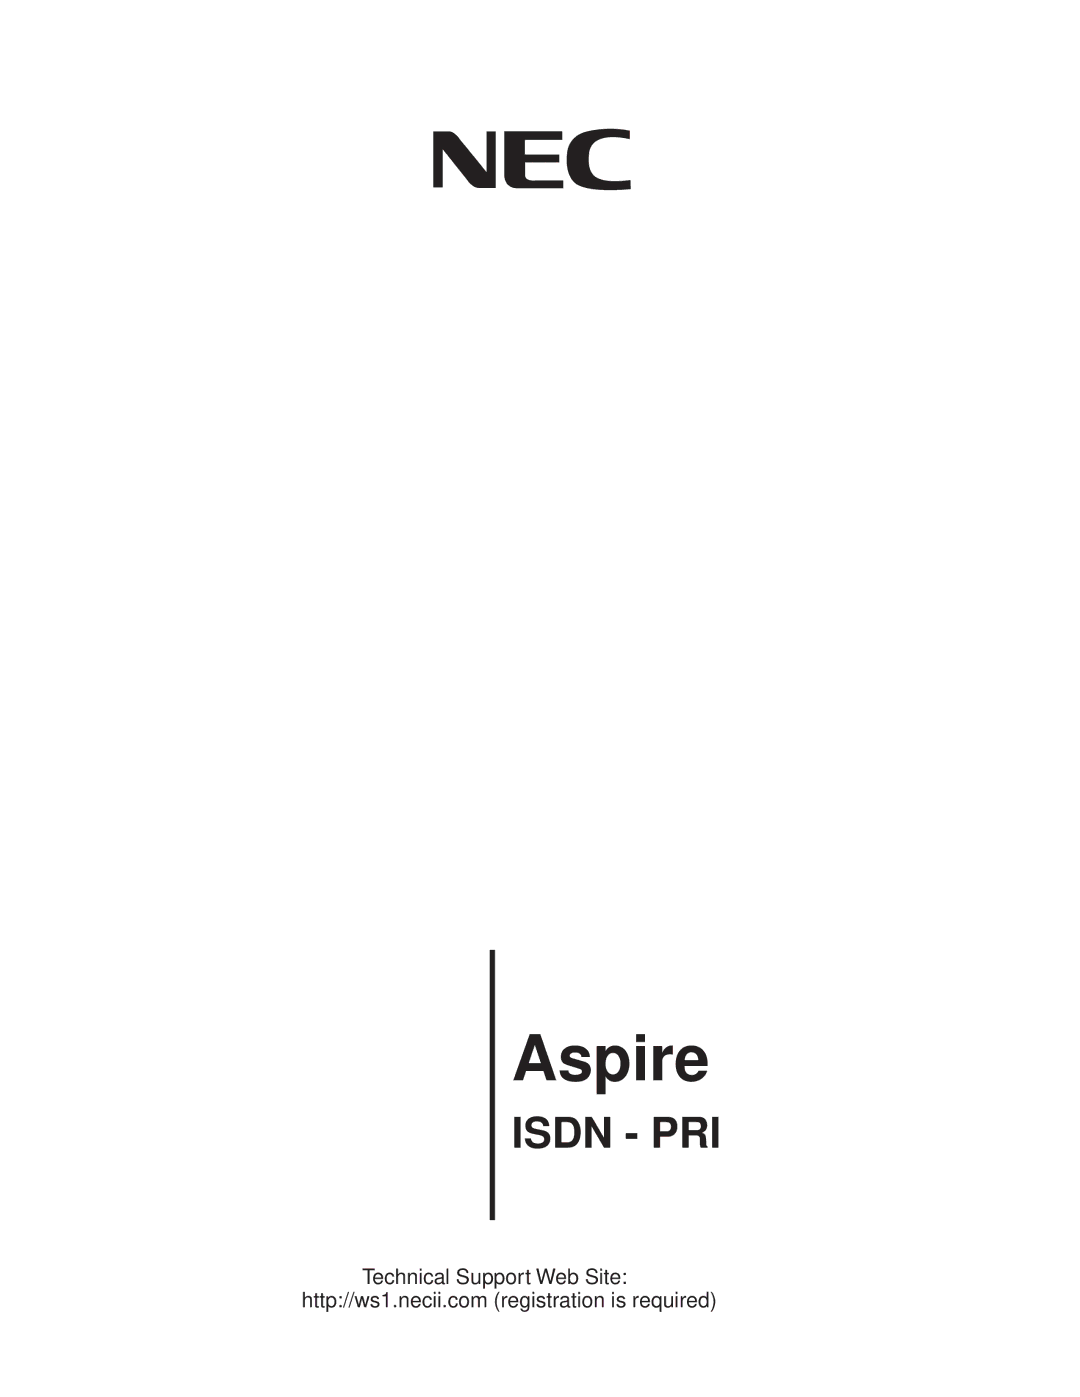 NEC ISDN-PRI manual Aspire 